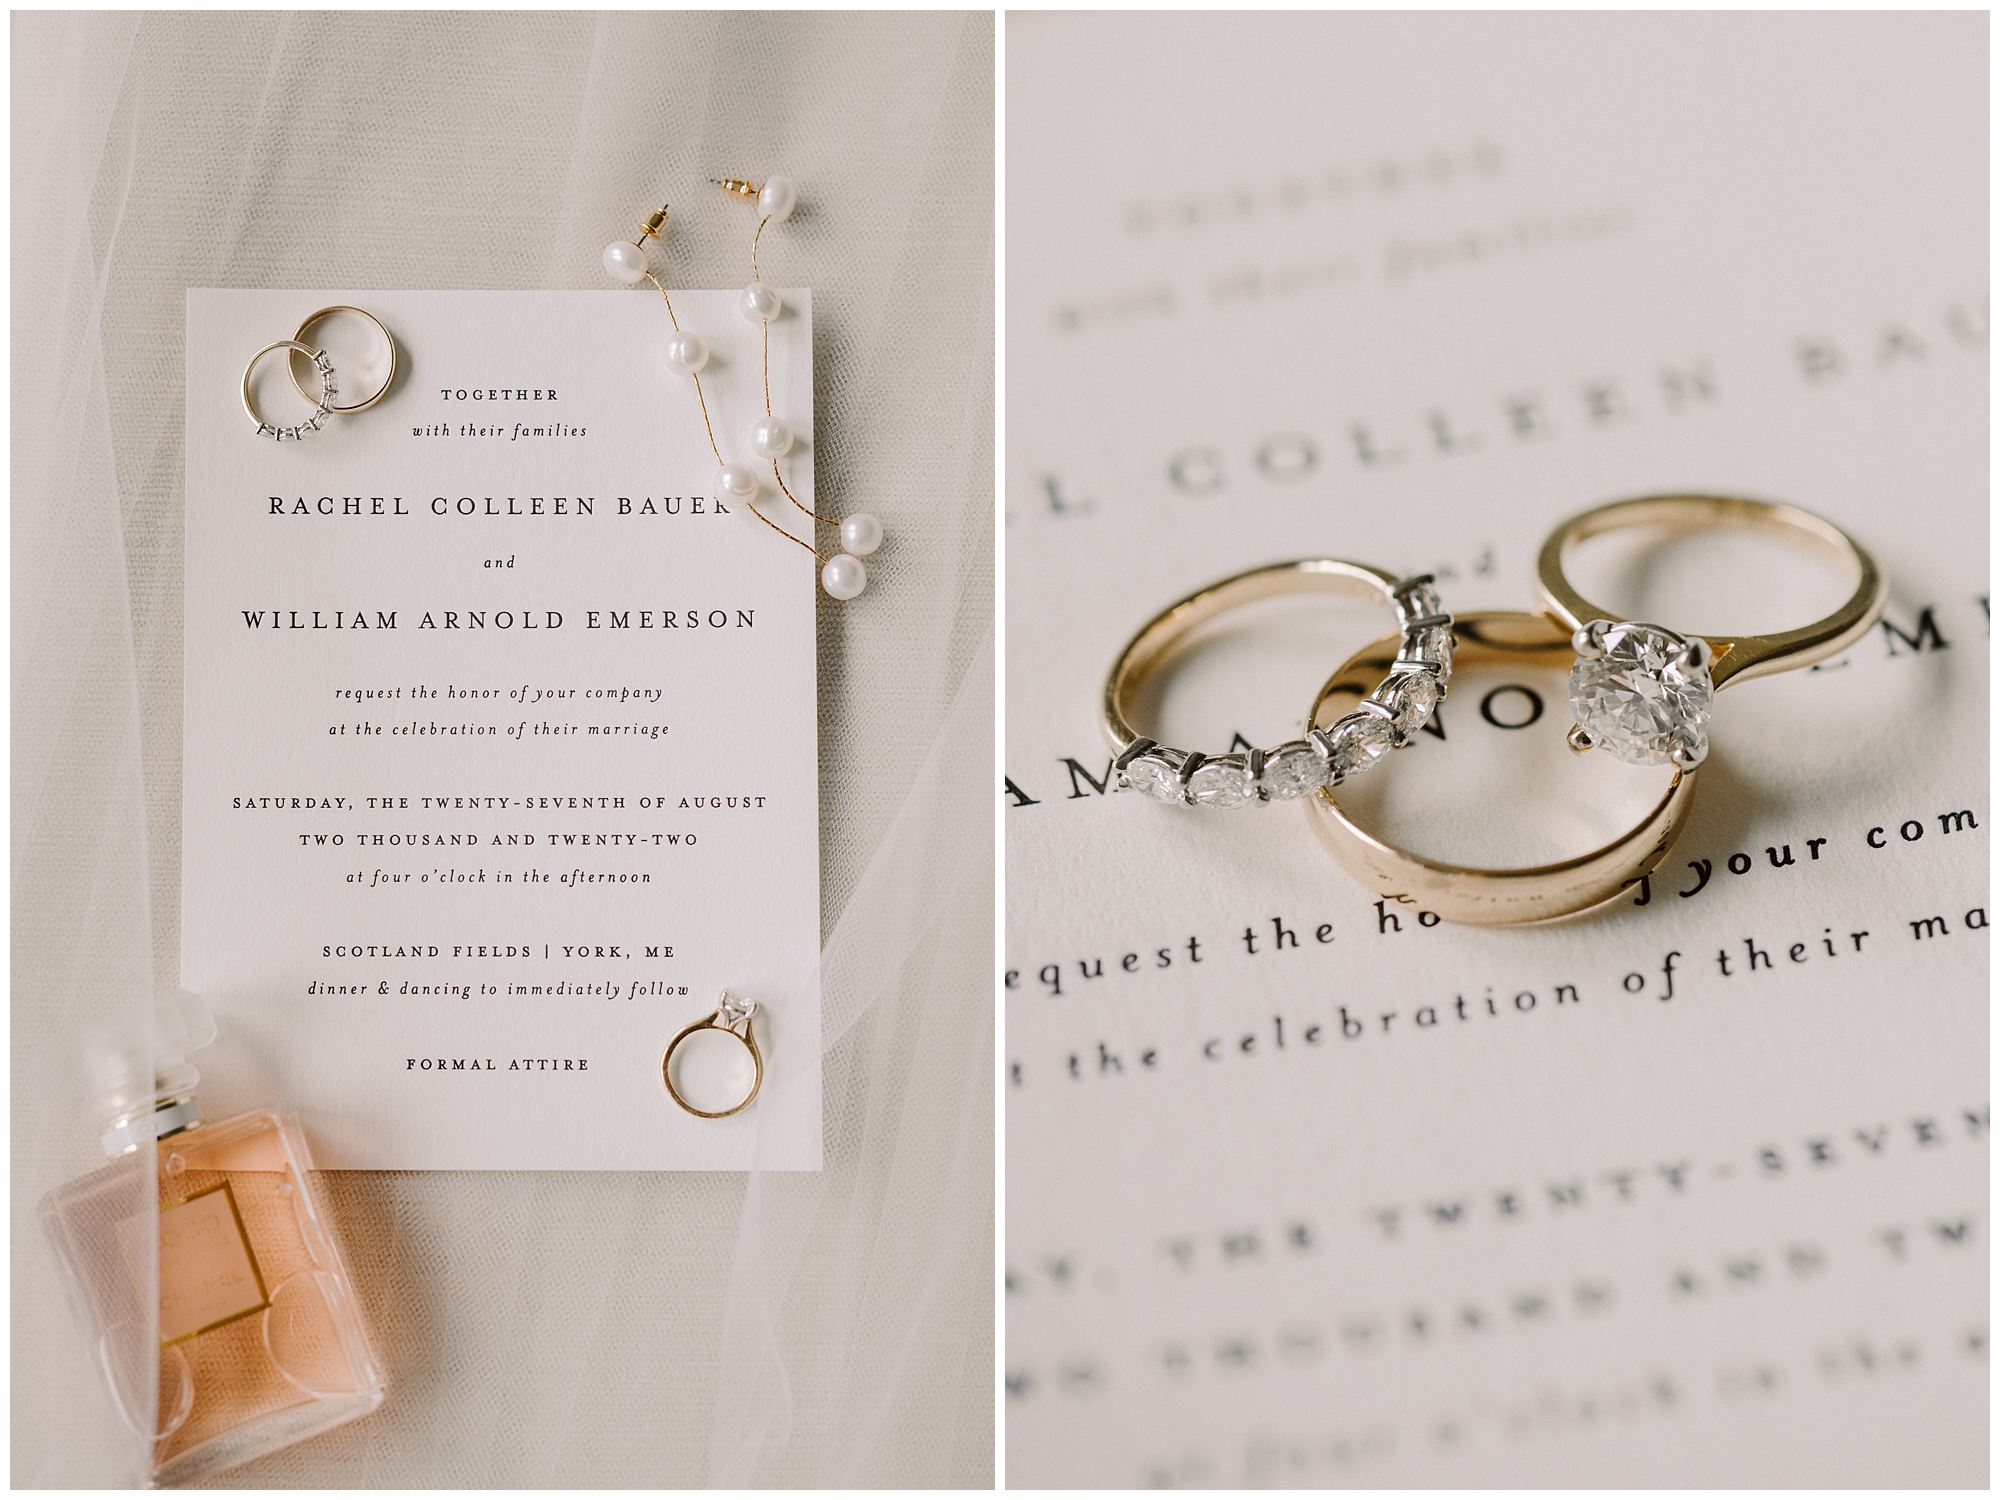 Wedding details, rings, and custom invitation